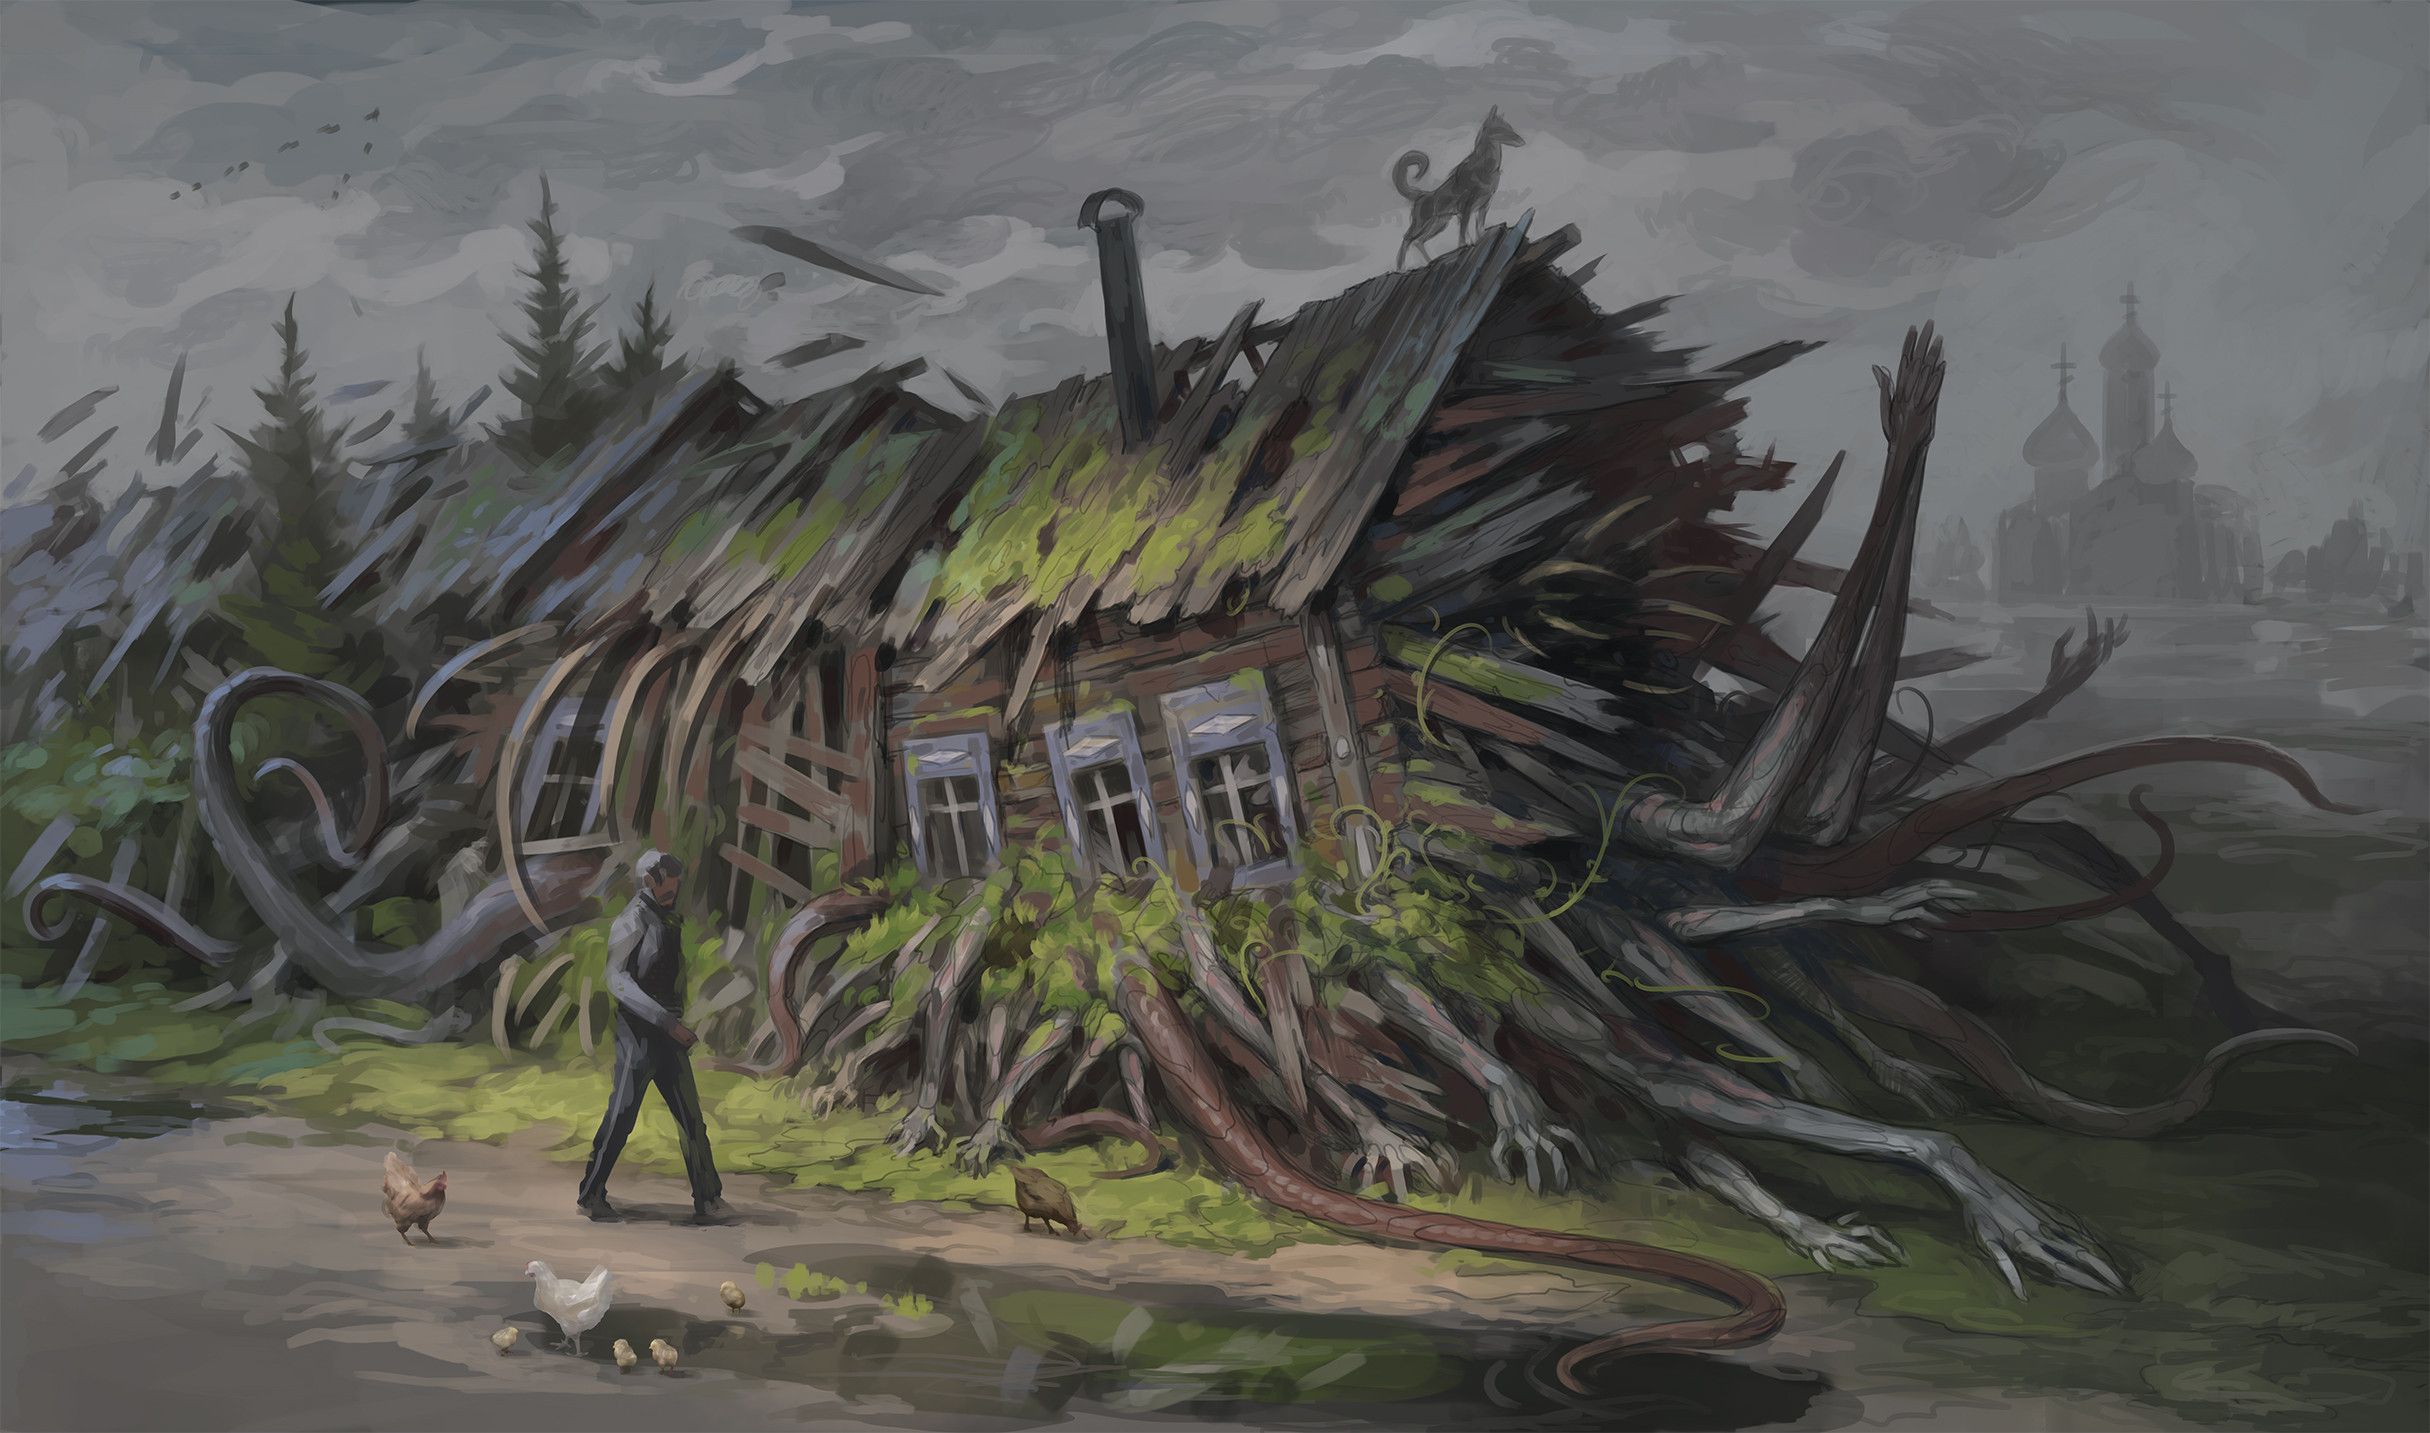 Digital Art Artwork Denis Zhbankov Creepy Fantasy Art Wooden Huts House Tentacles Church Hands Men 2430x1433